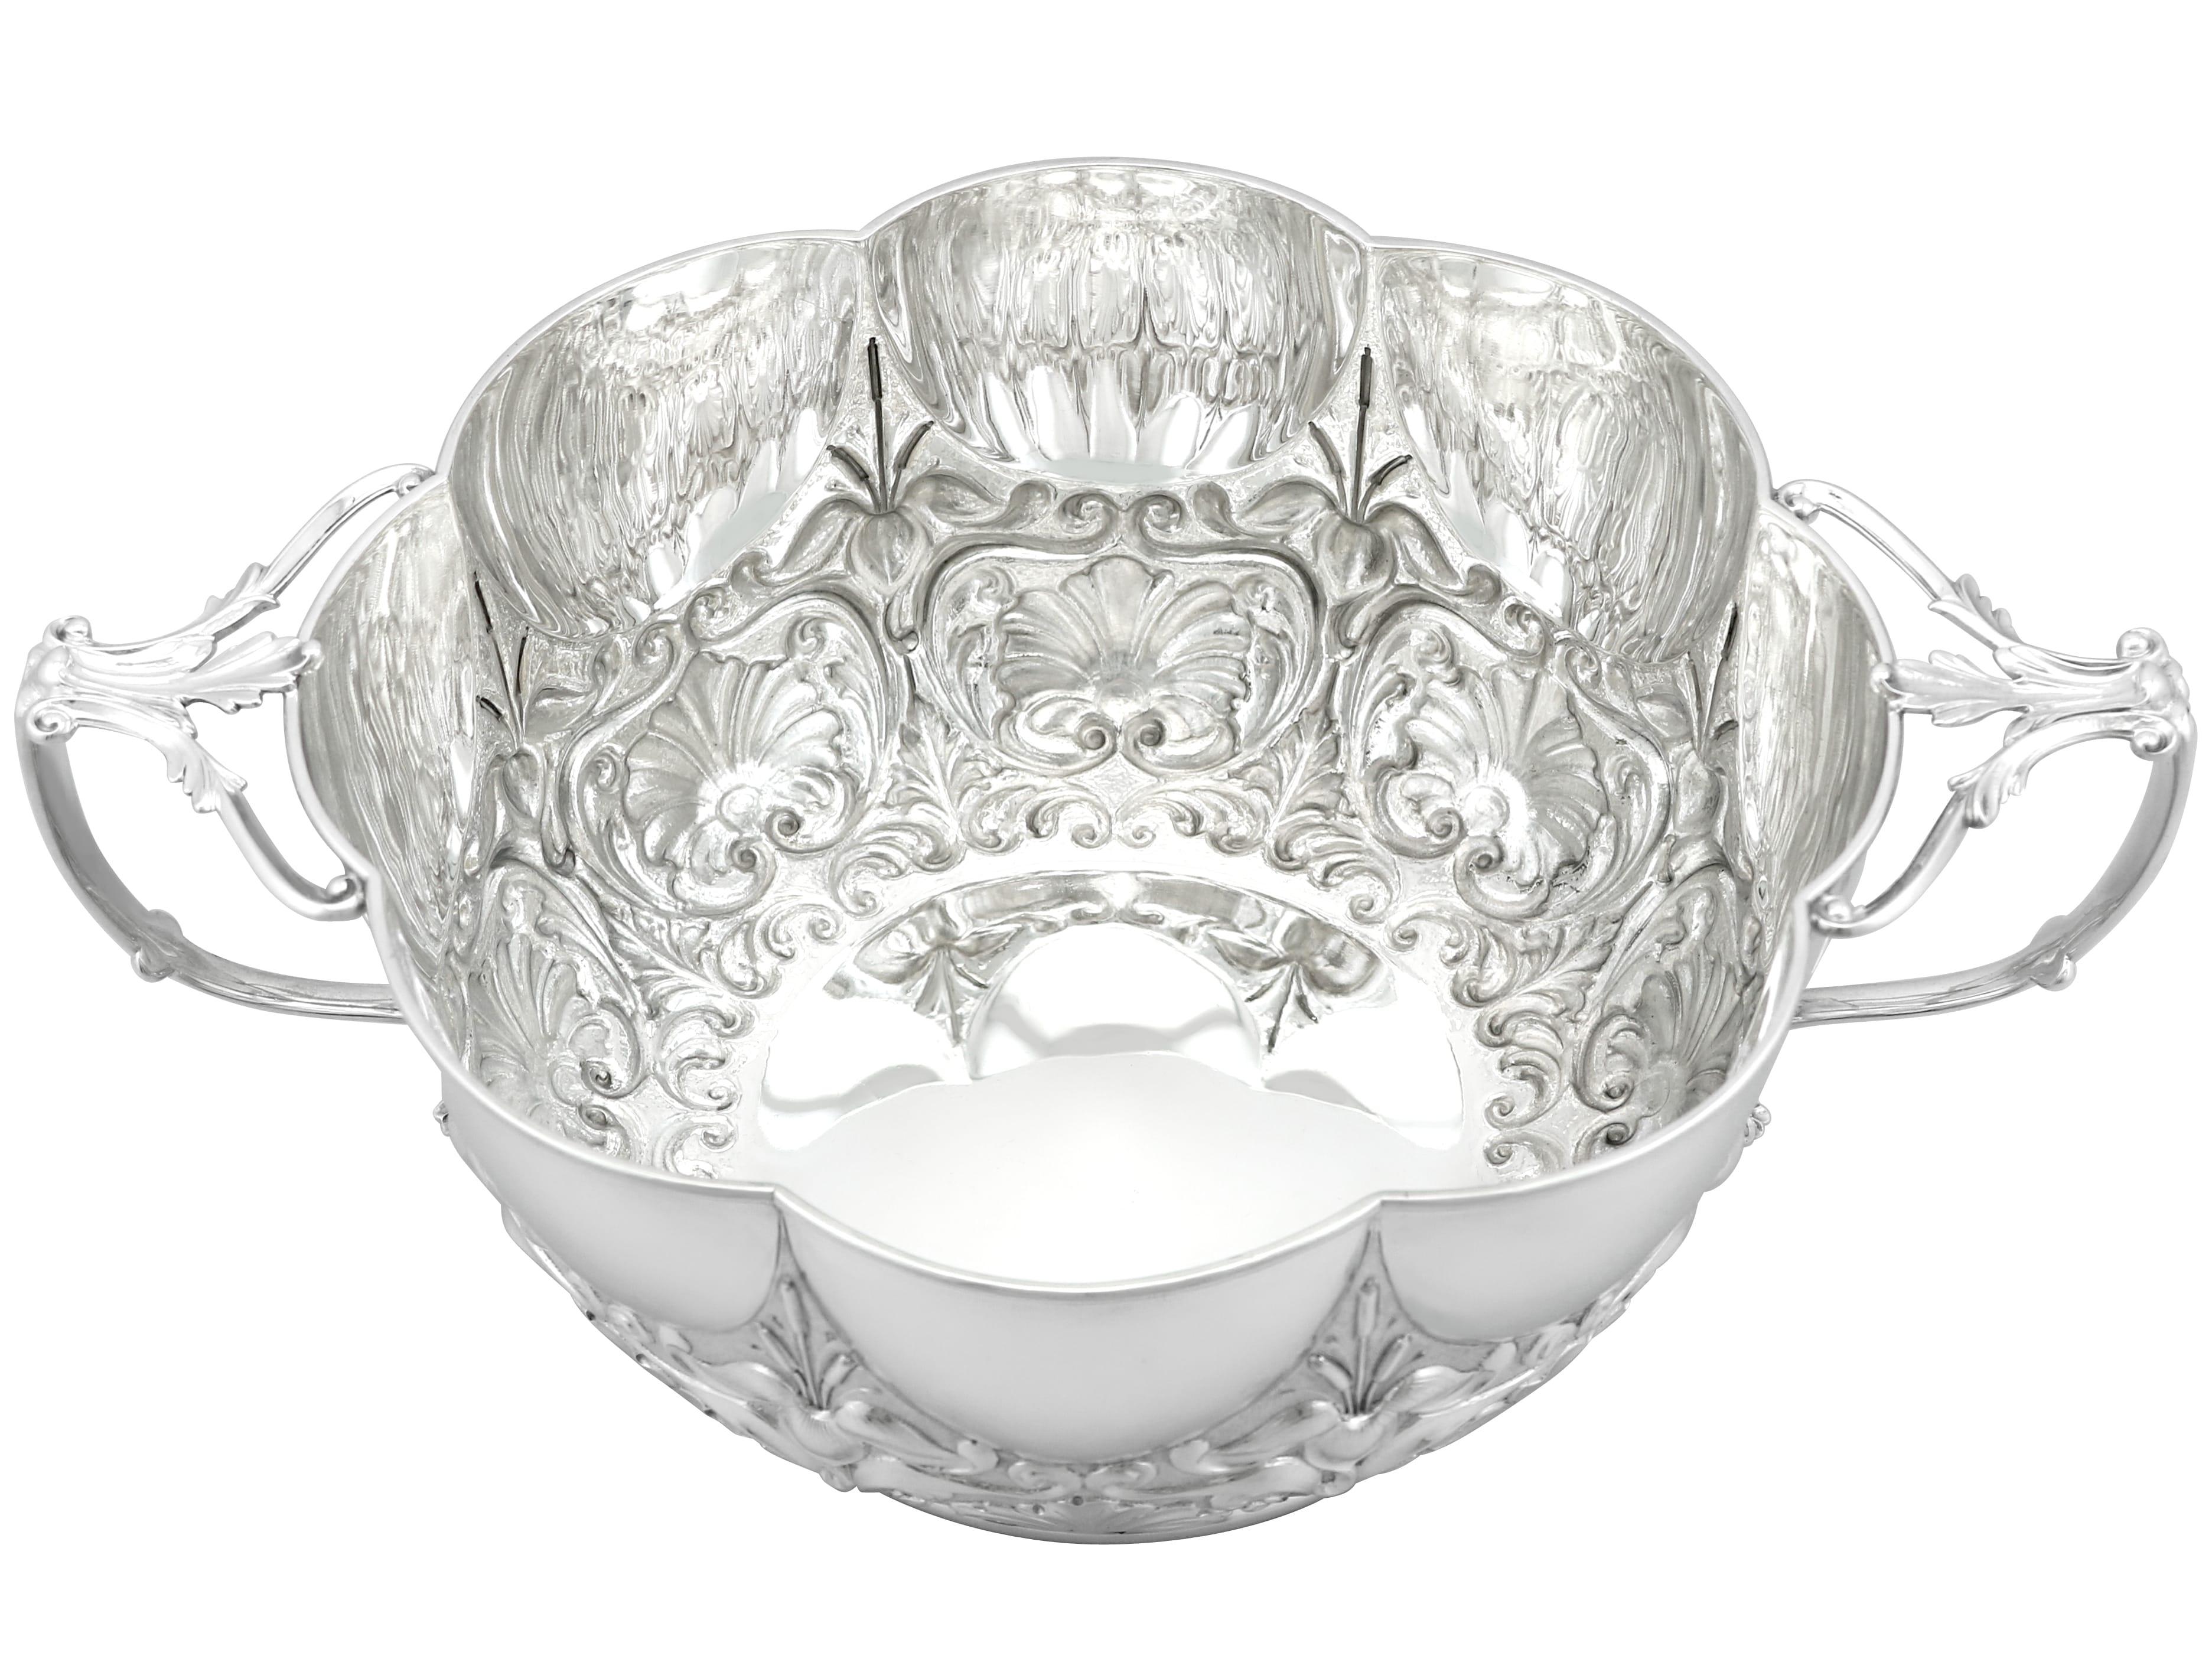 Edwardian English Sterling Silver Bowl Art Nouveau Style For Sale 5